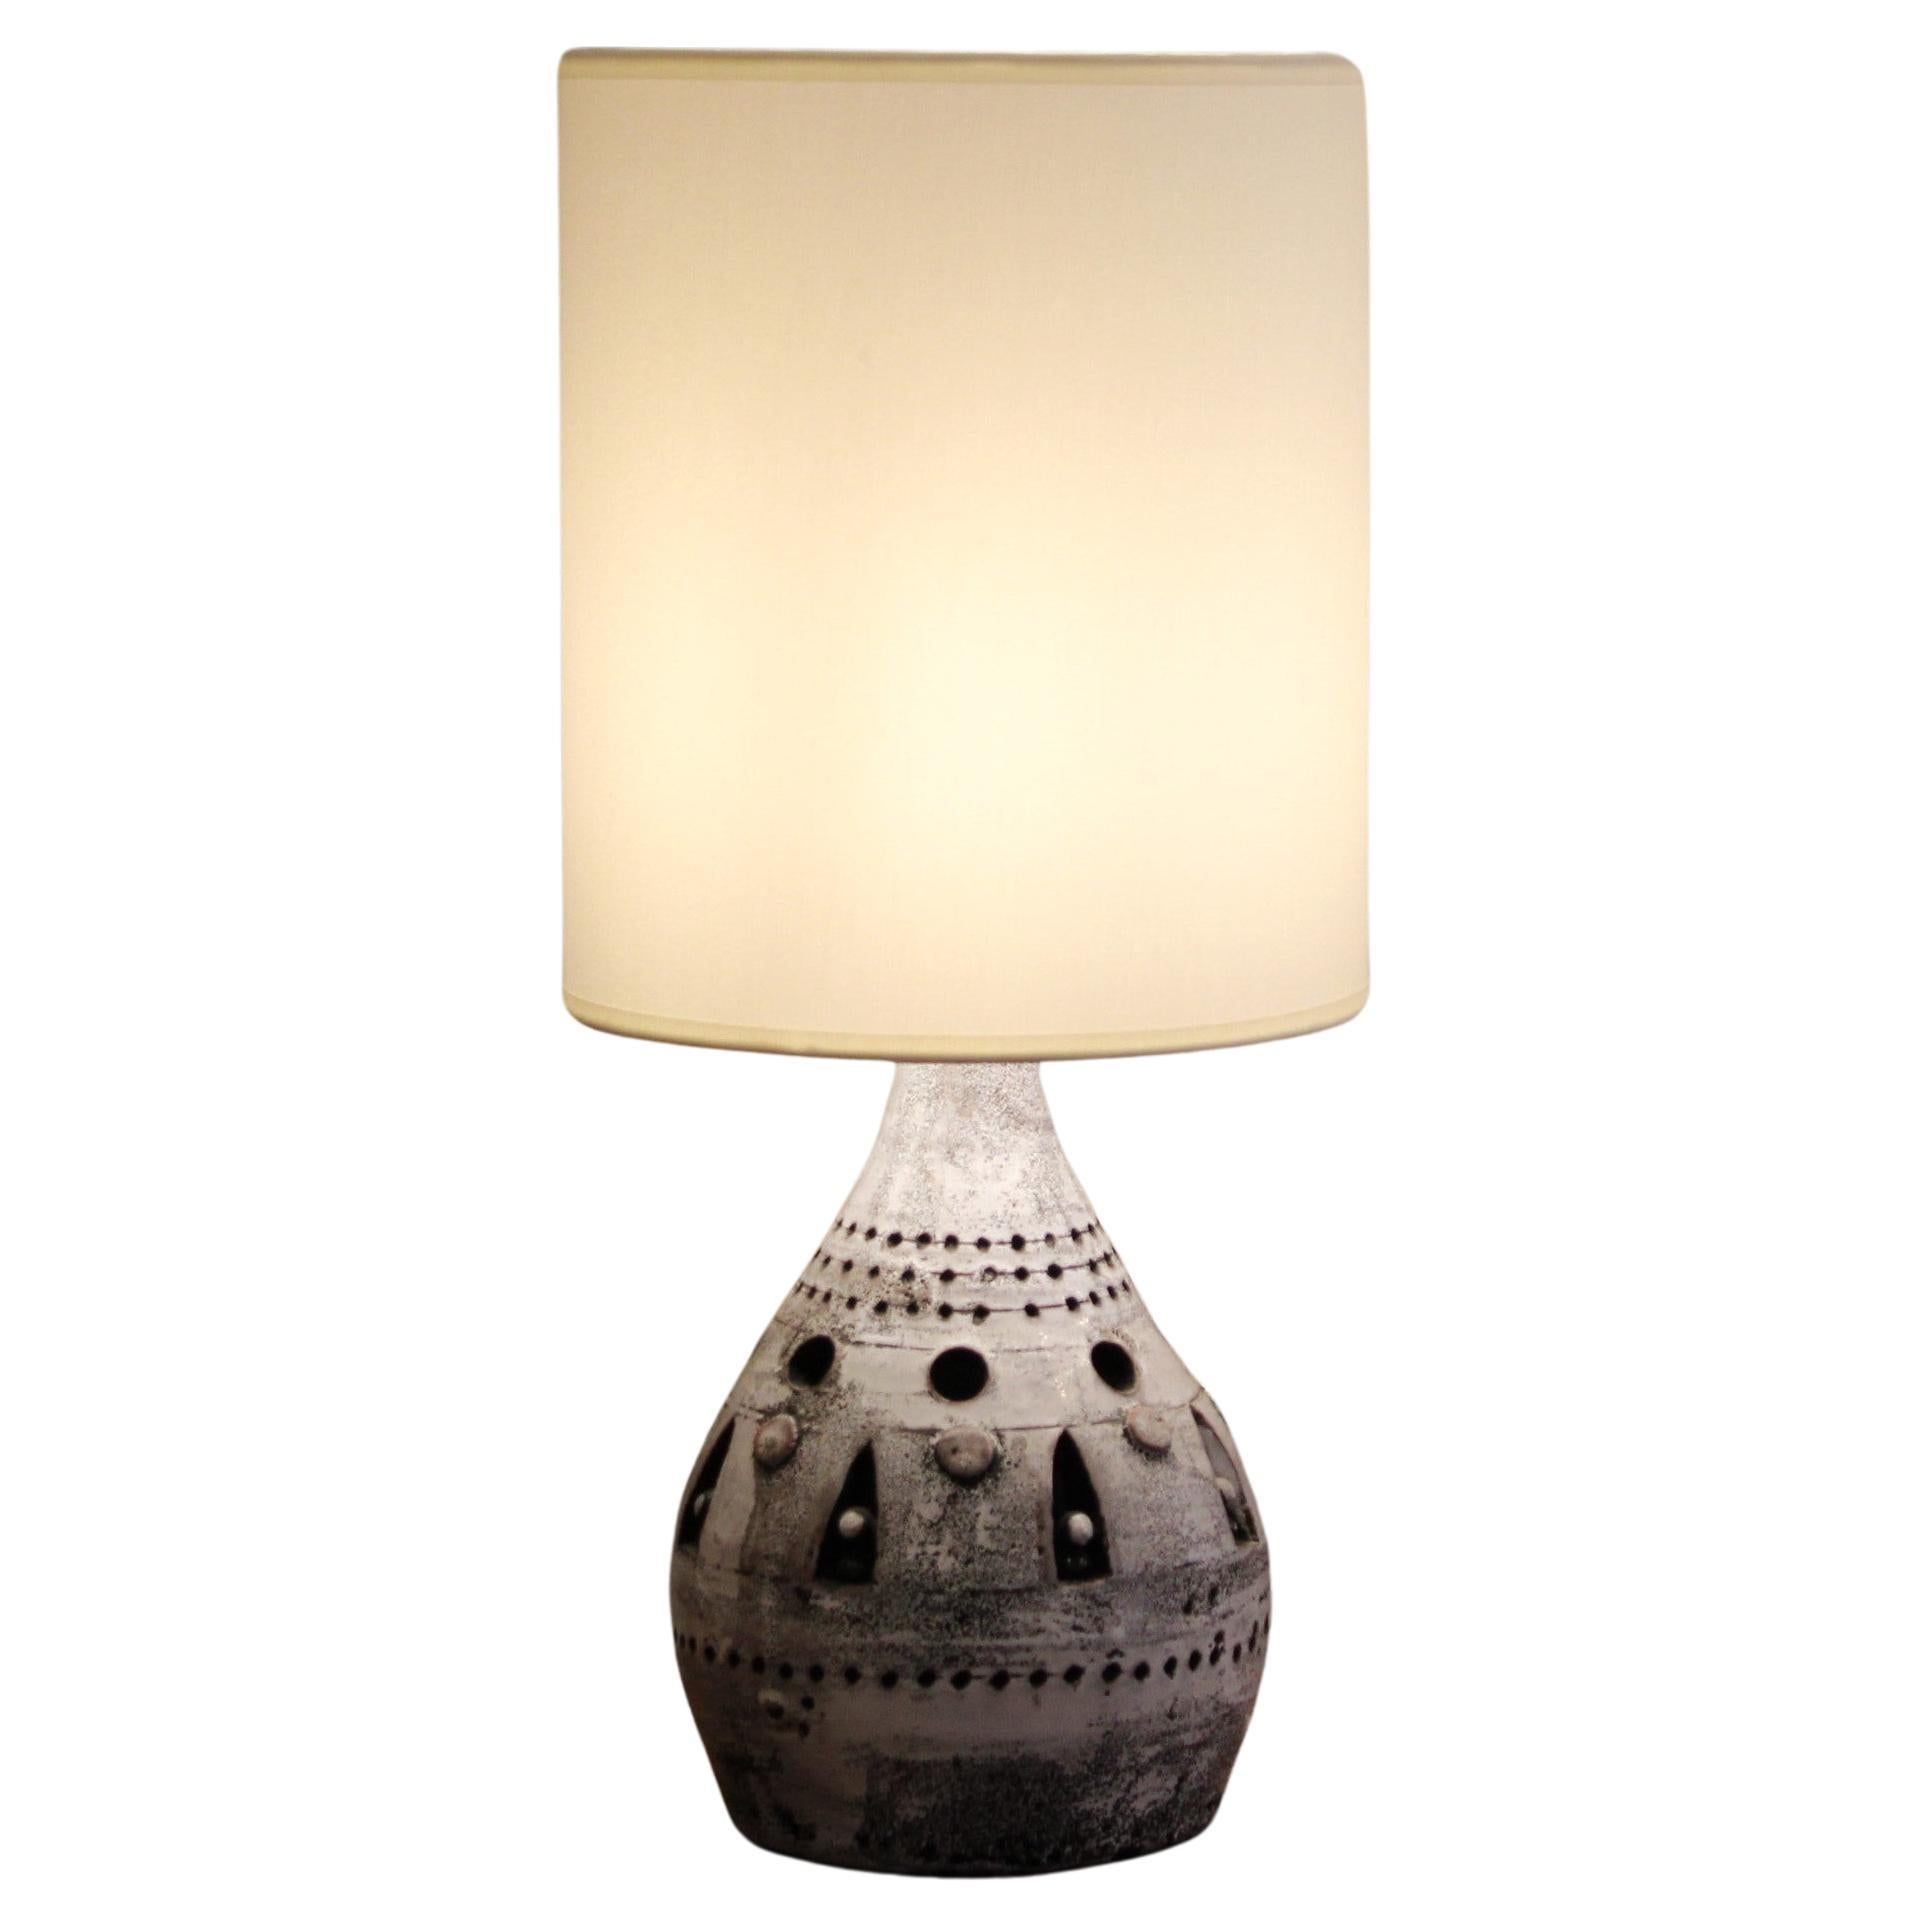 Ceramic table lamp, Georges Pelletier